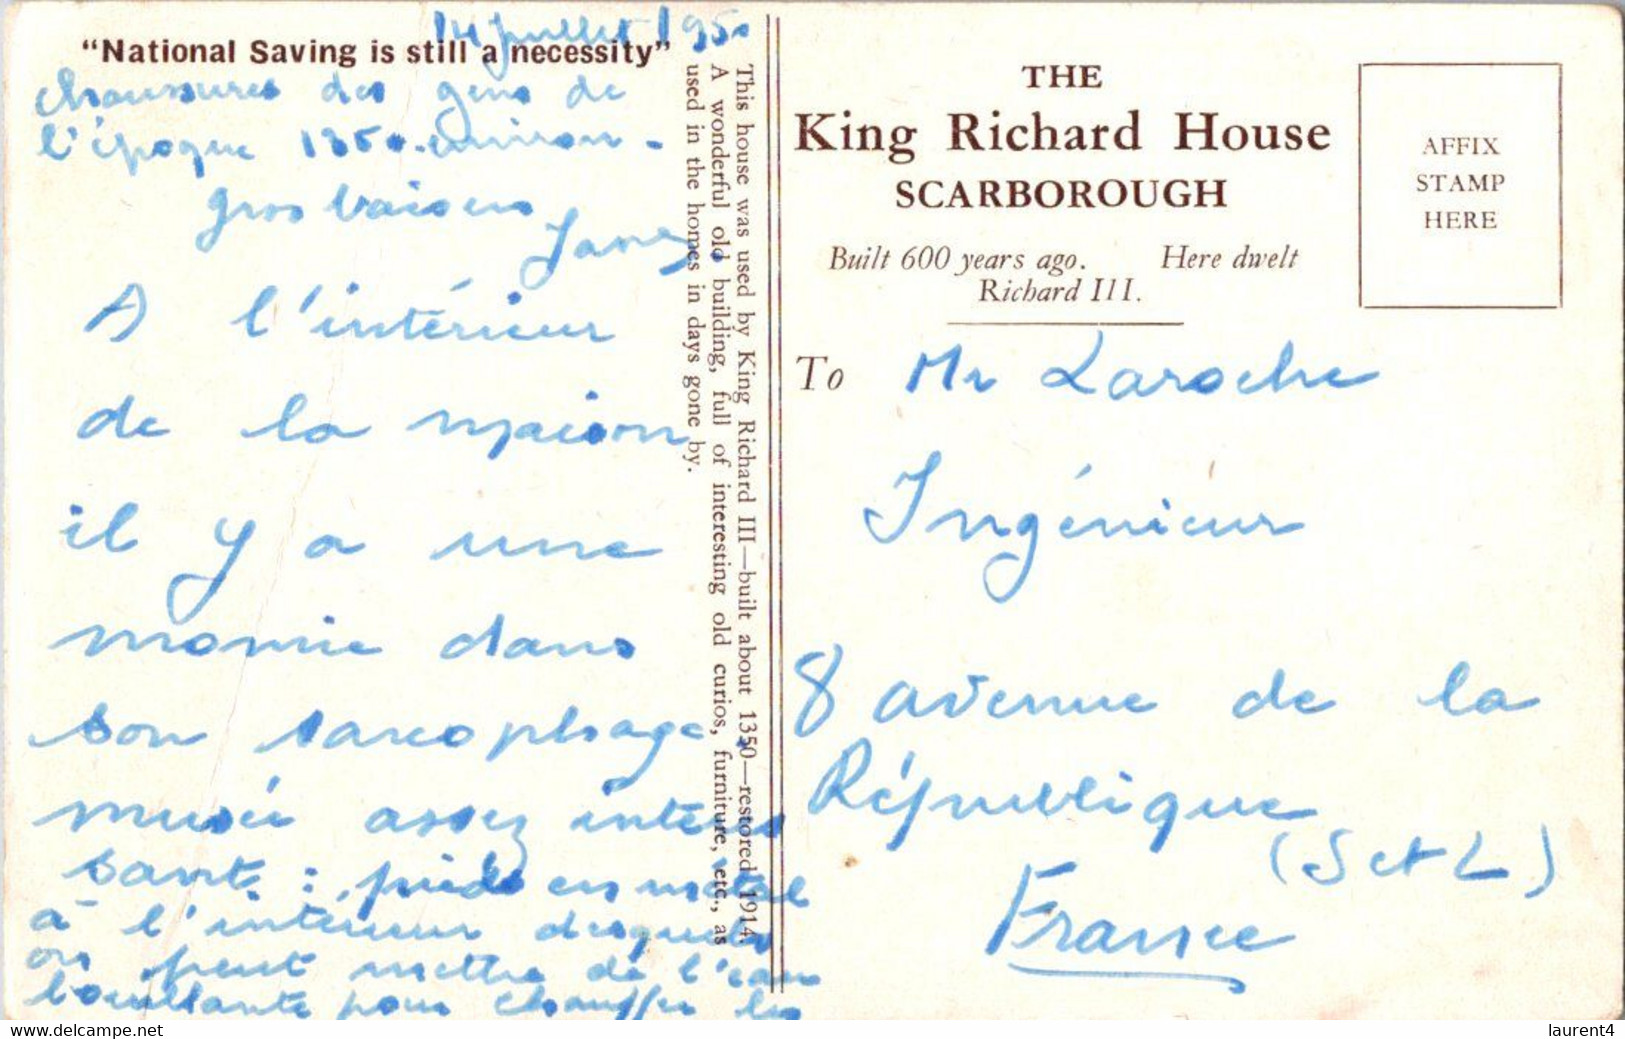 (1 P 11) UK - (posted) (b/w) Scraborough King Richard House - Scarborough